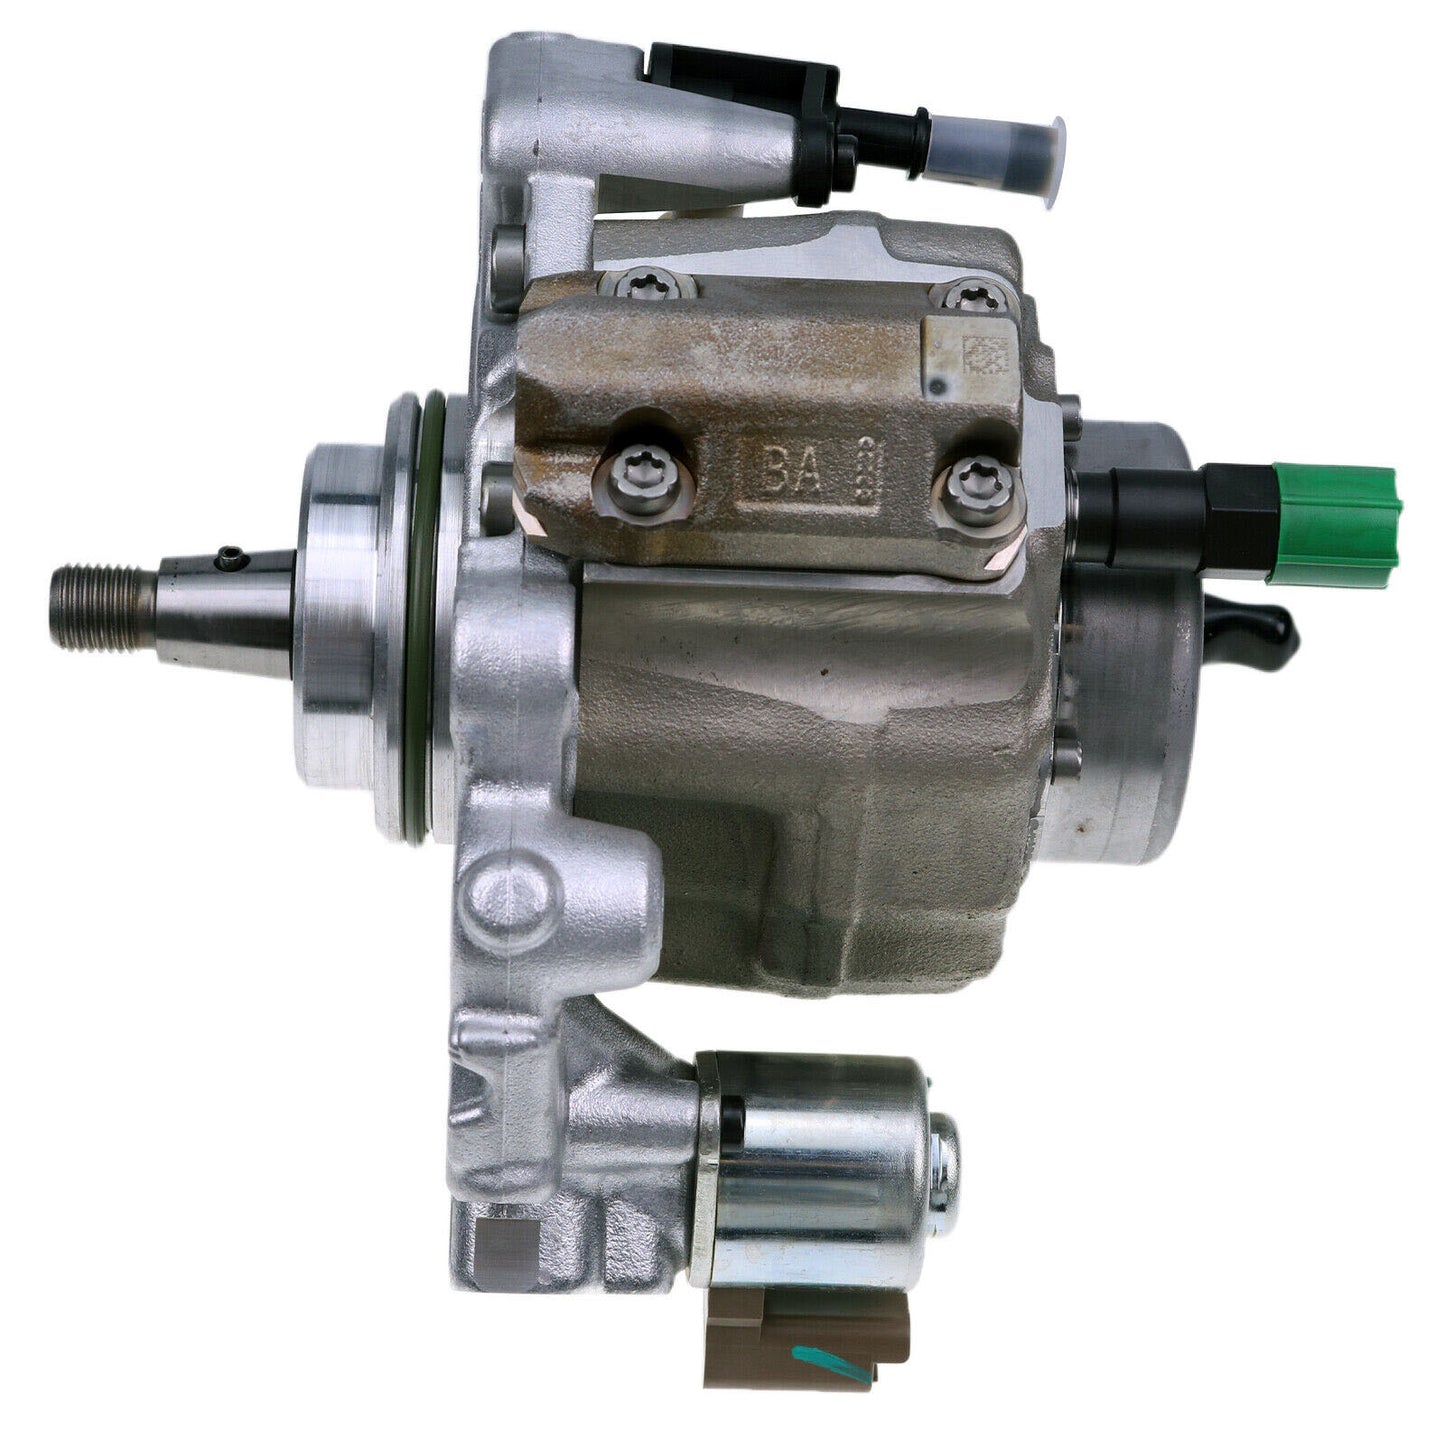 New 7256789 Fuel Injection Pump Compatible with Bobcat S740, S750, S770, S870, T740, T750, T770, T870 with Doosan D34 Engine